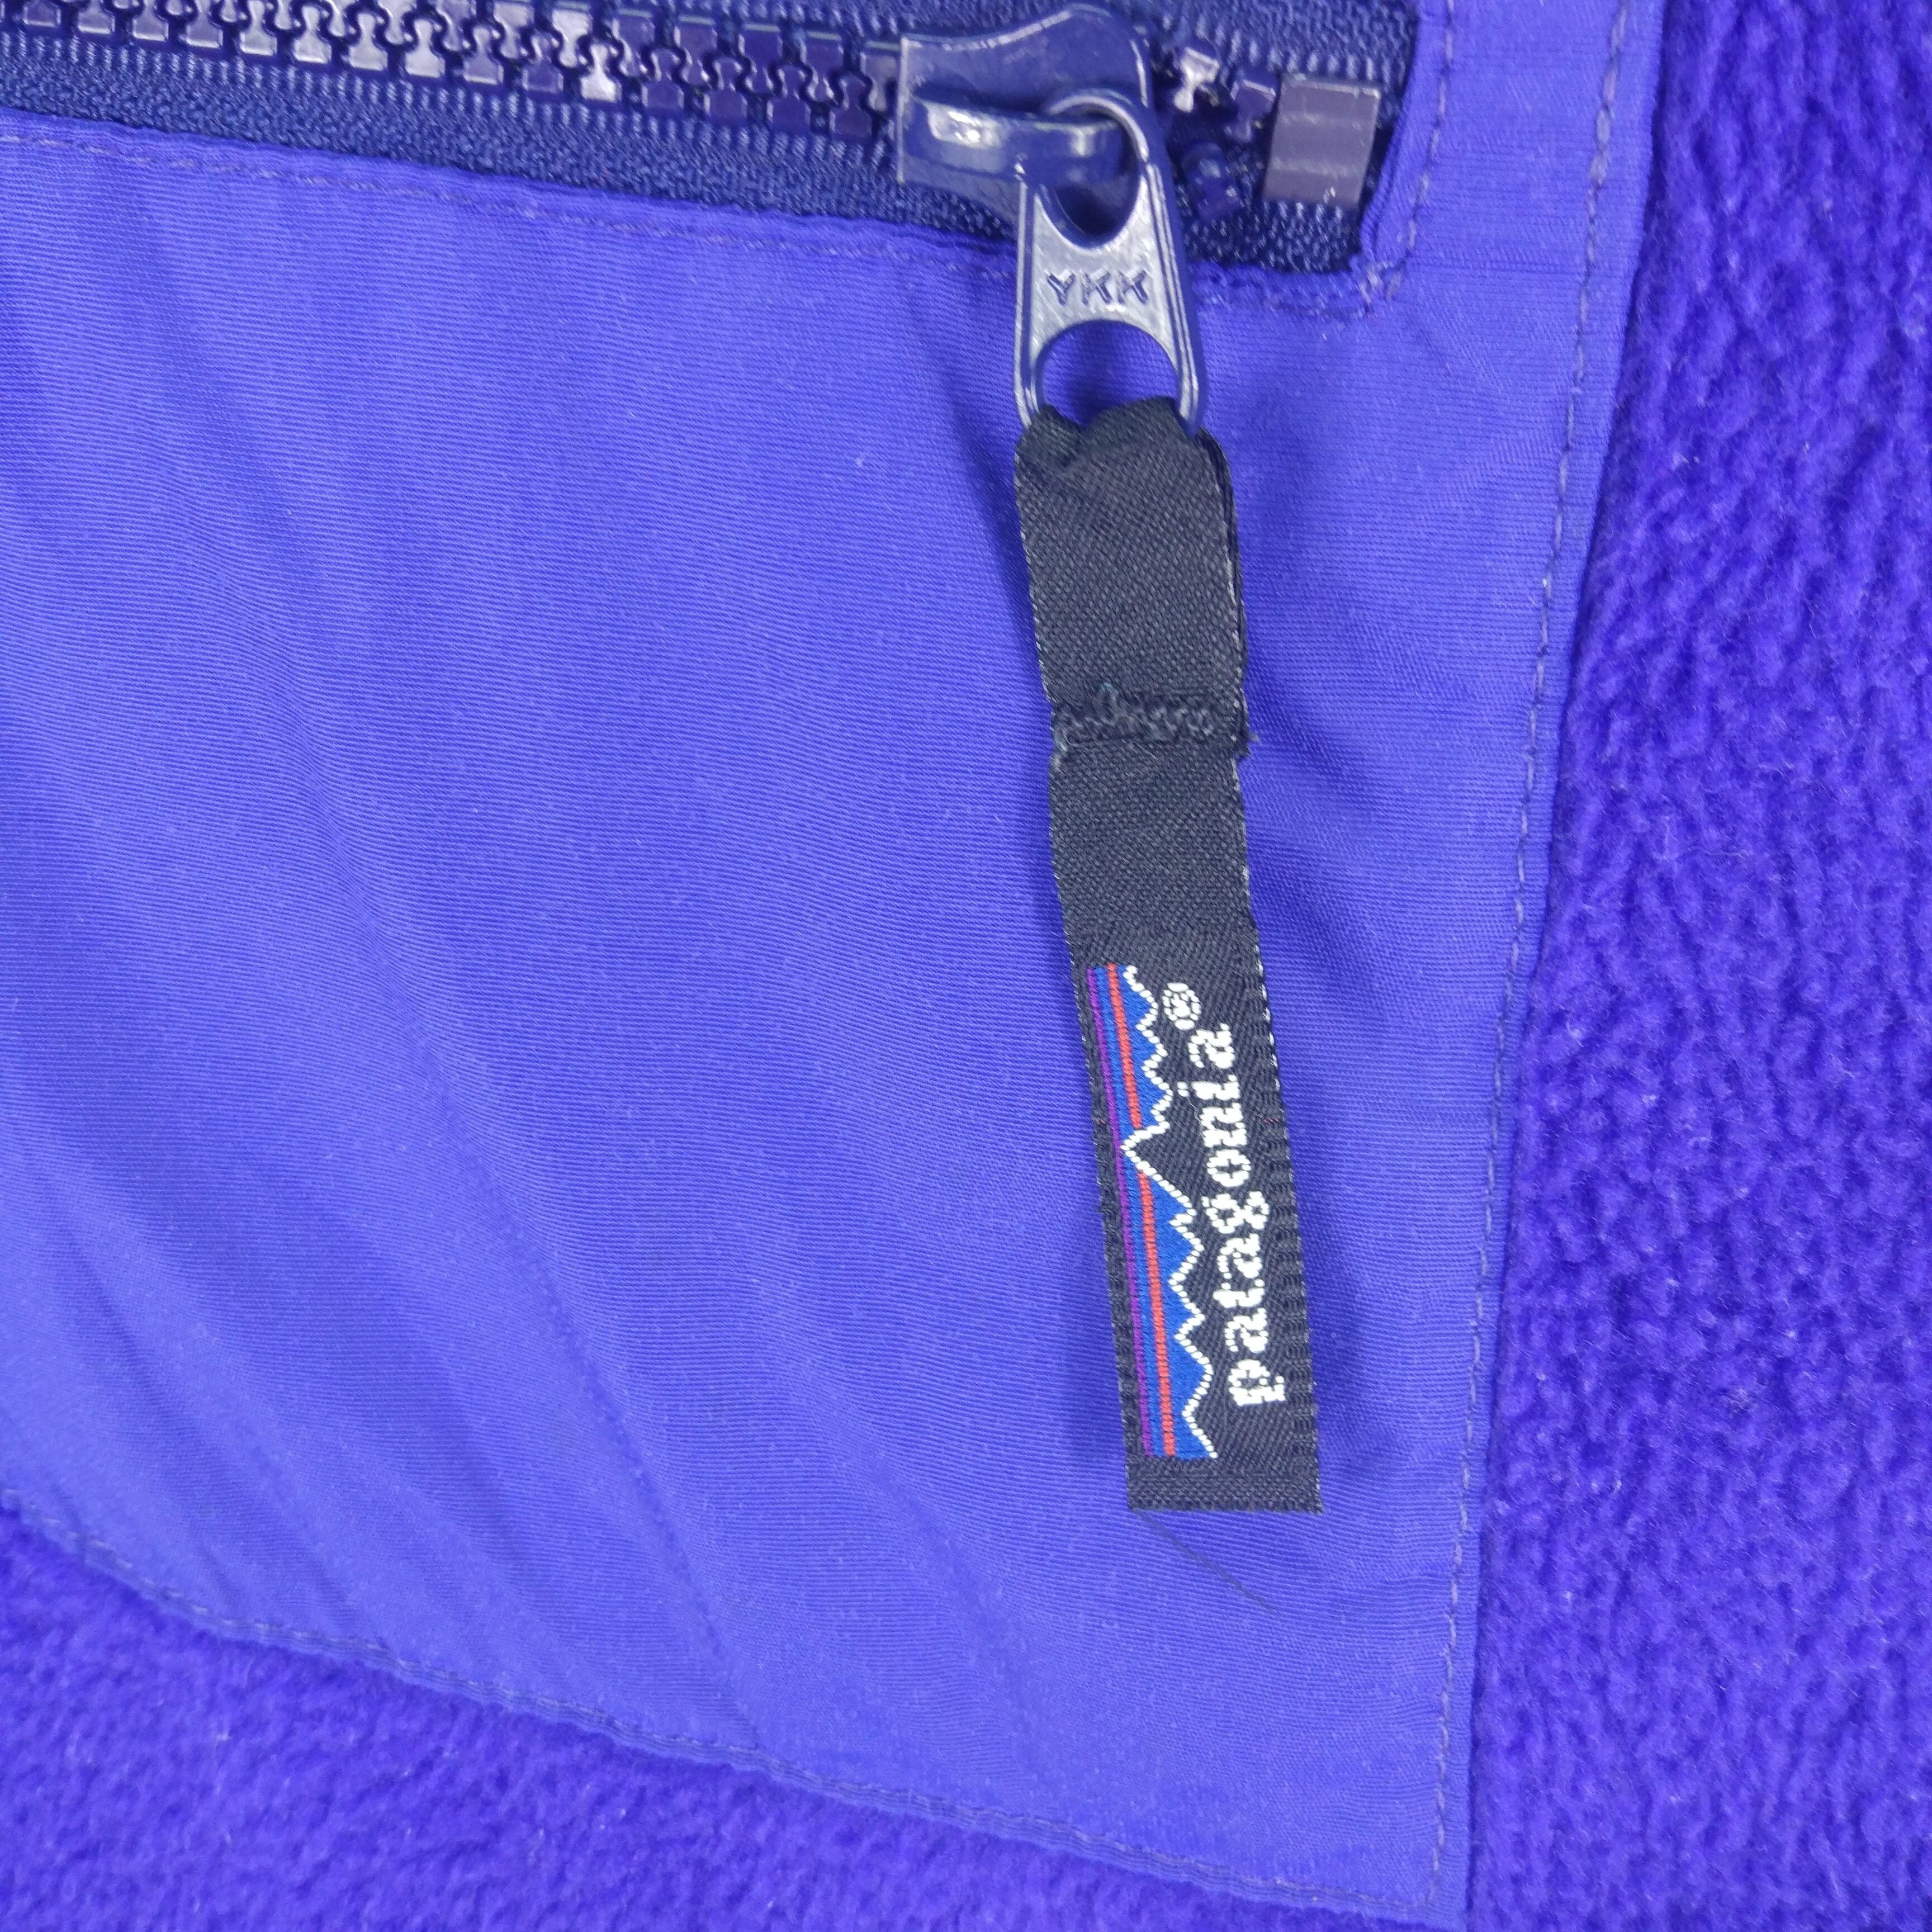 Patagonia Zip Up Fleece Jacket Made in USA - 4